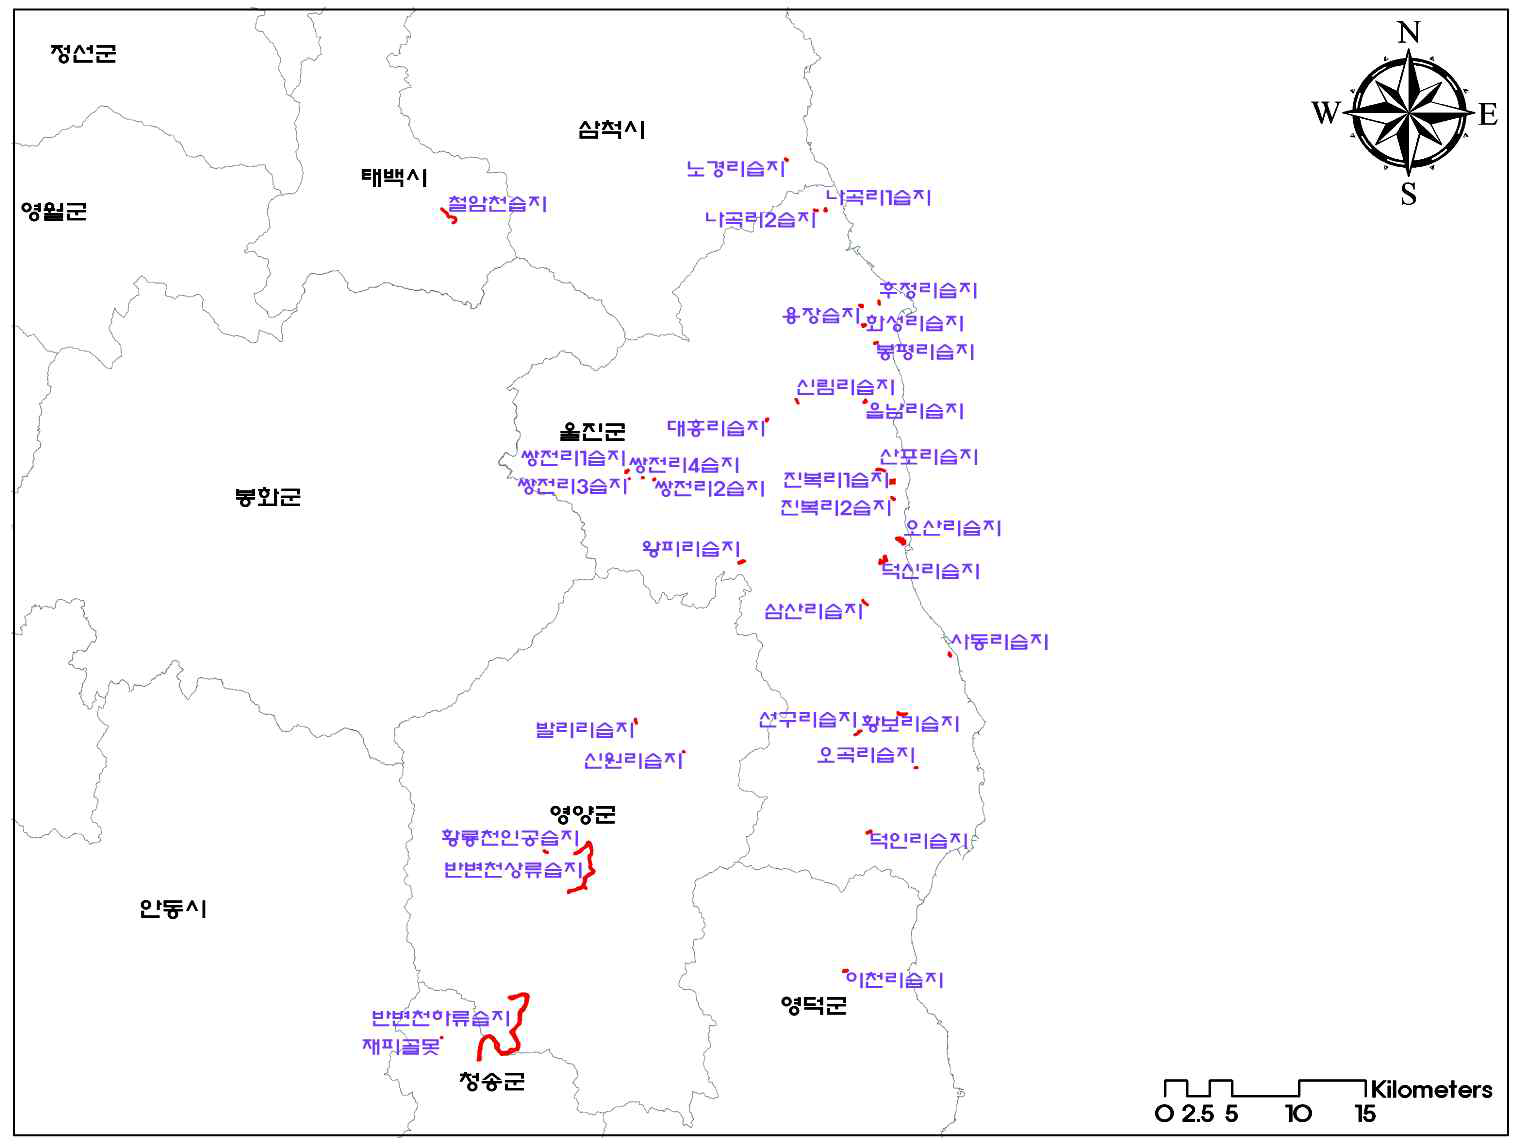 Survey sites of Donghae 3 sub-regions.